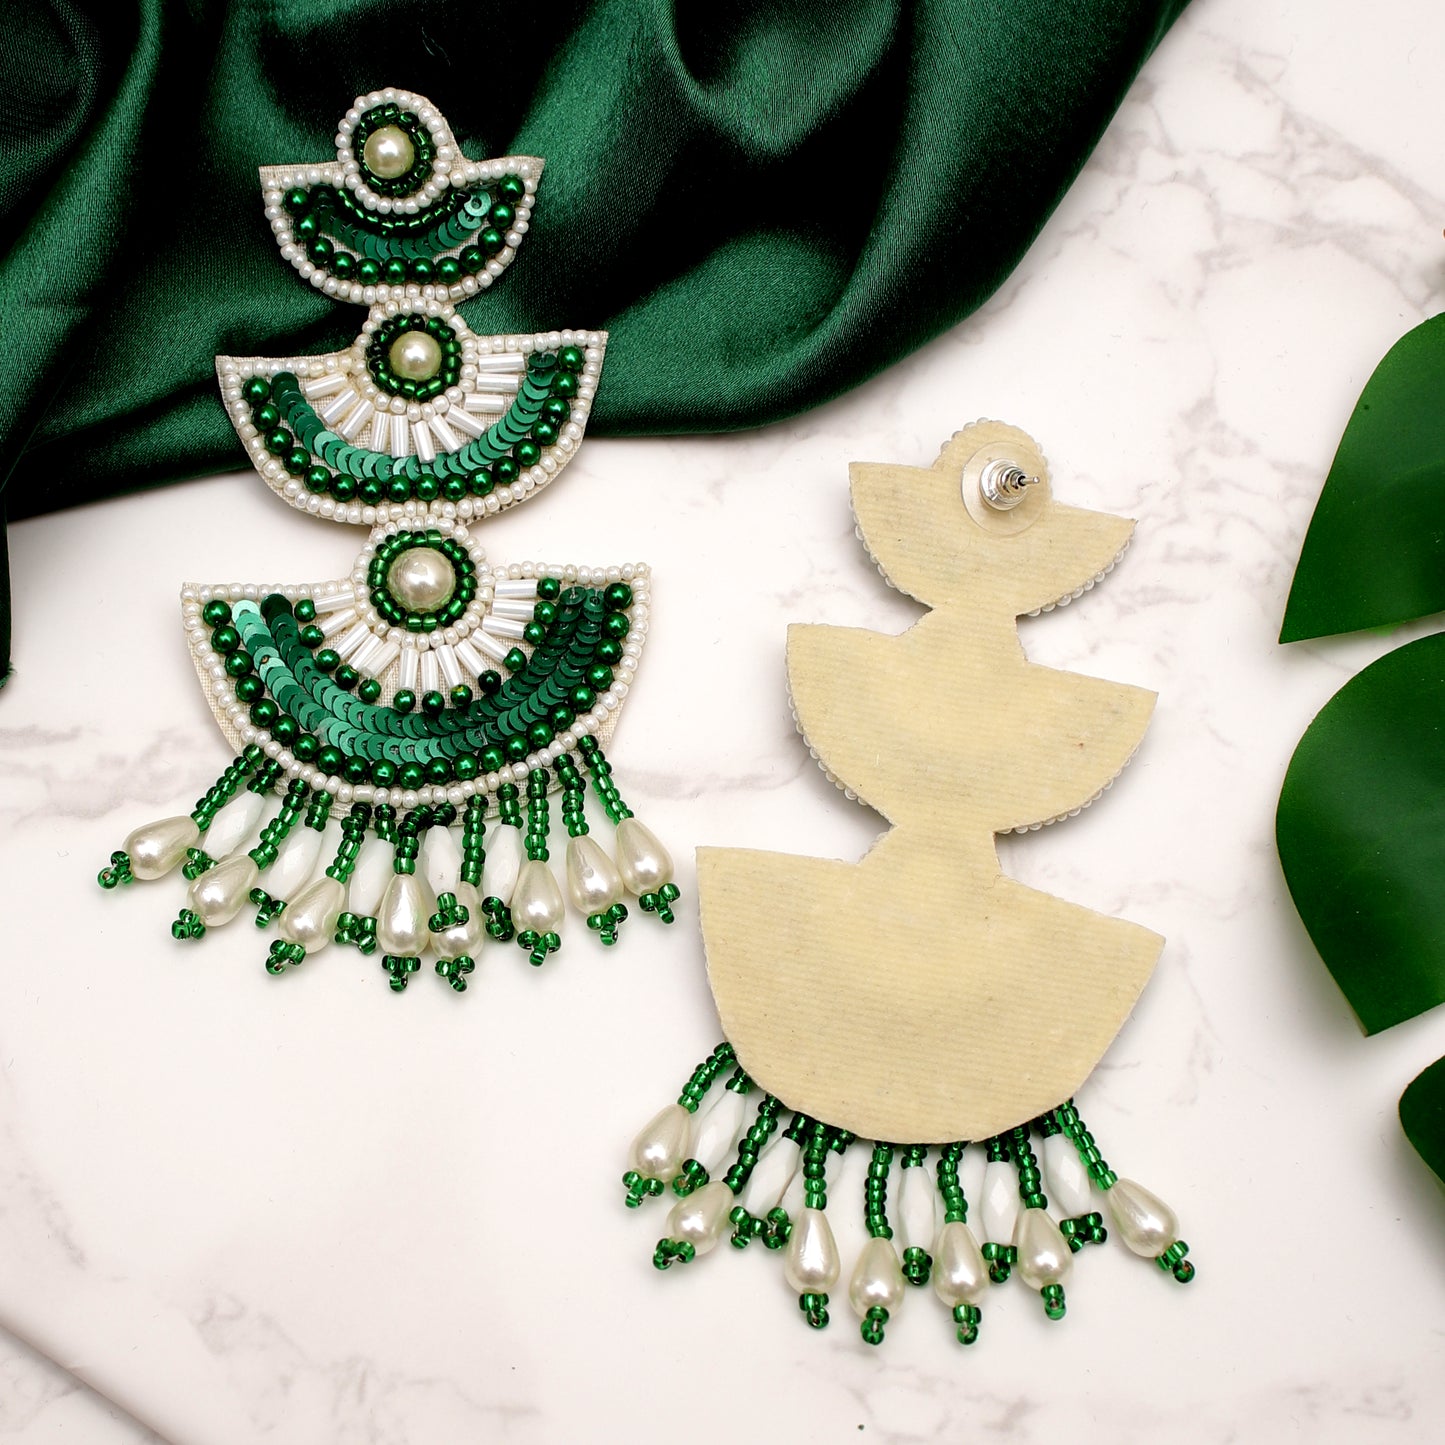 The White & Green Beaded Trinkara Earrings